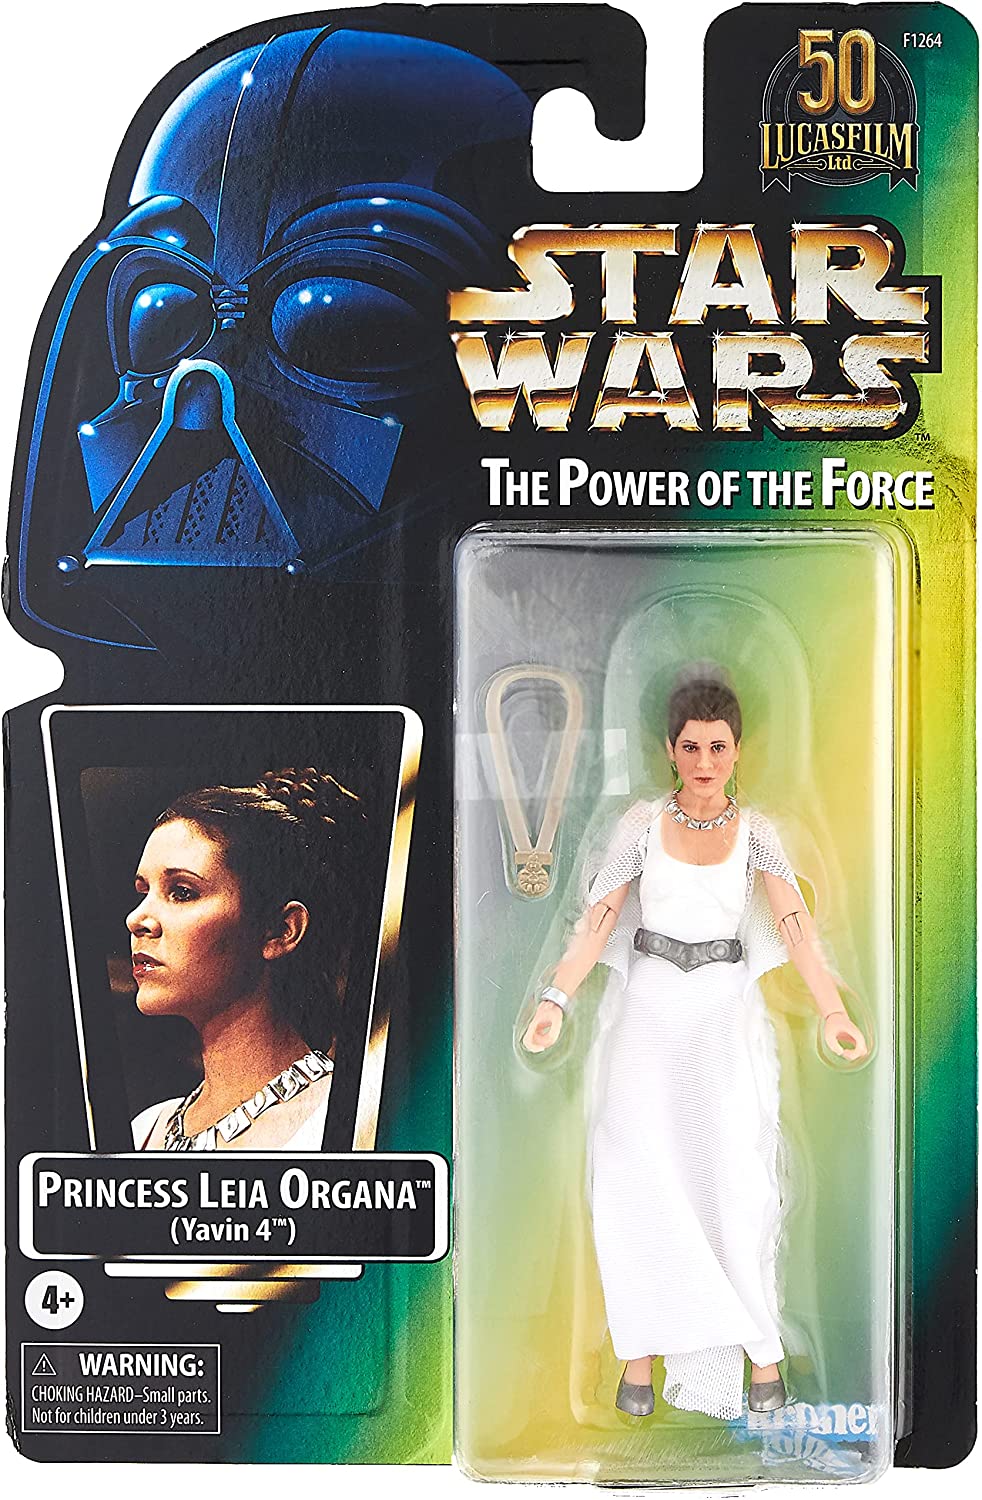 Star Wars Princess Leia Organa (Yavin 4)